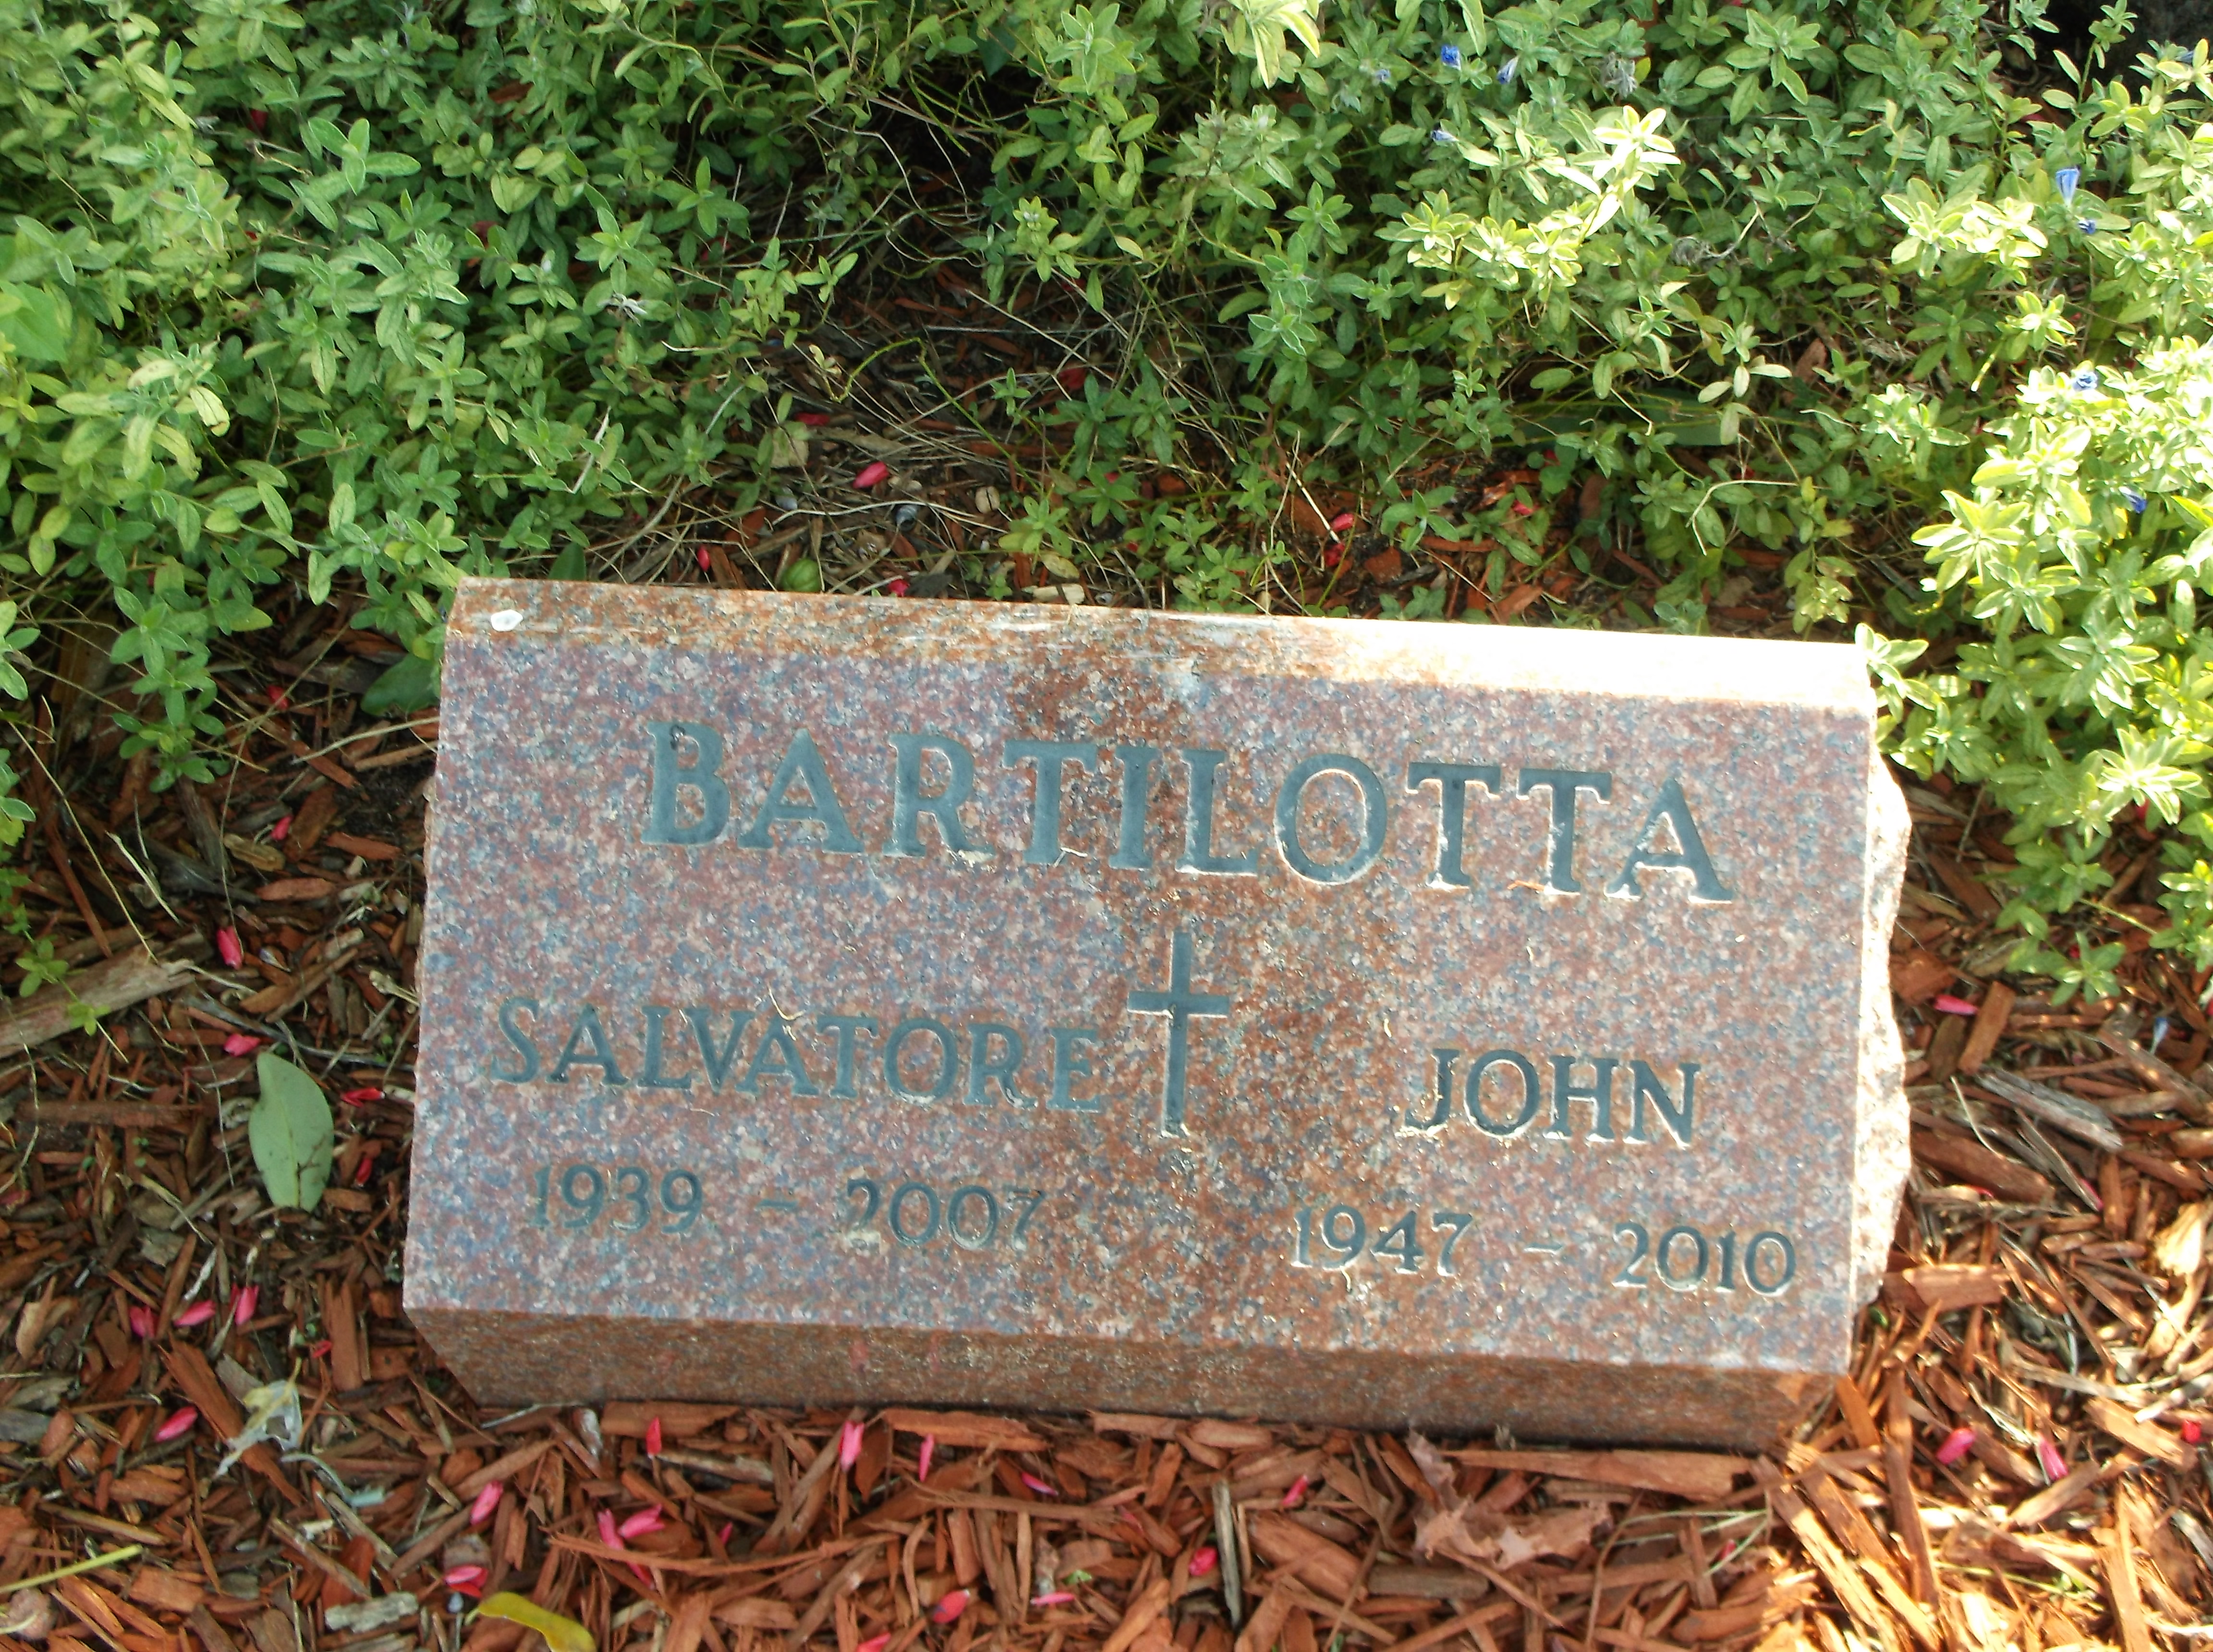 John Bartilotta